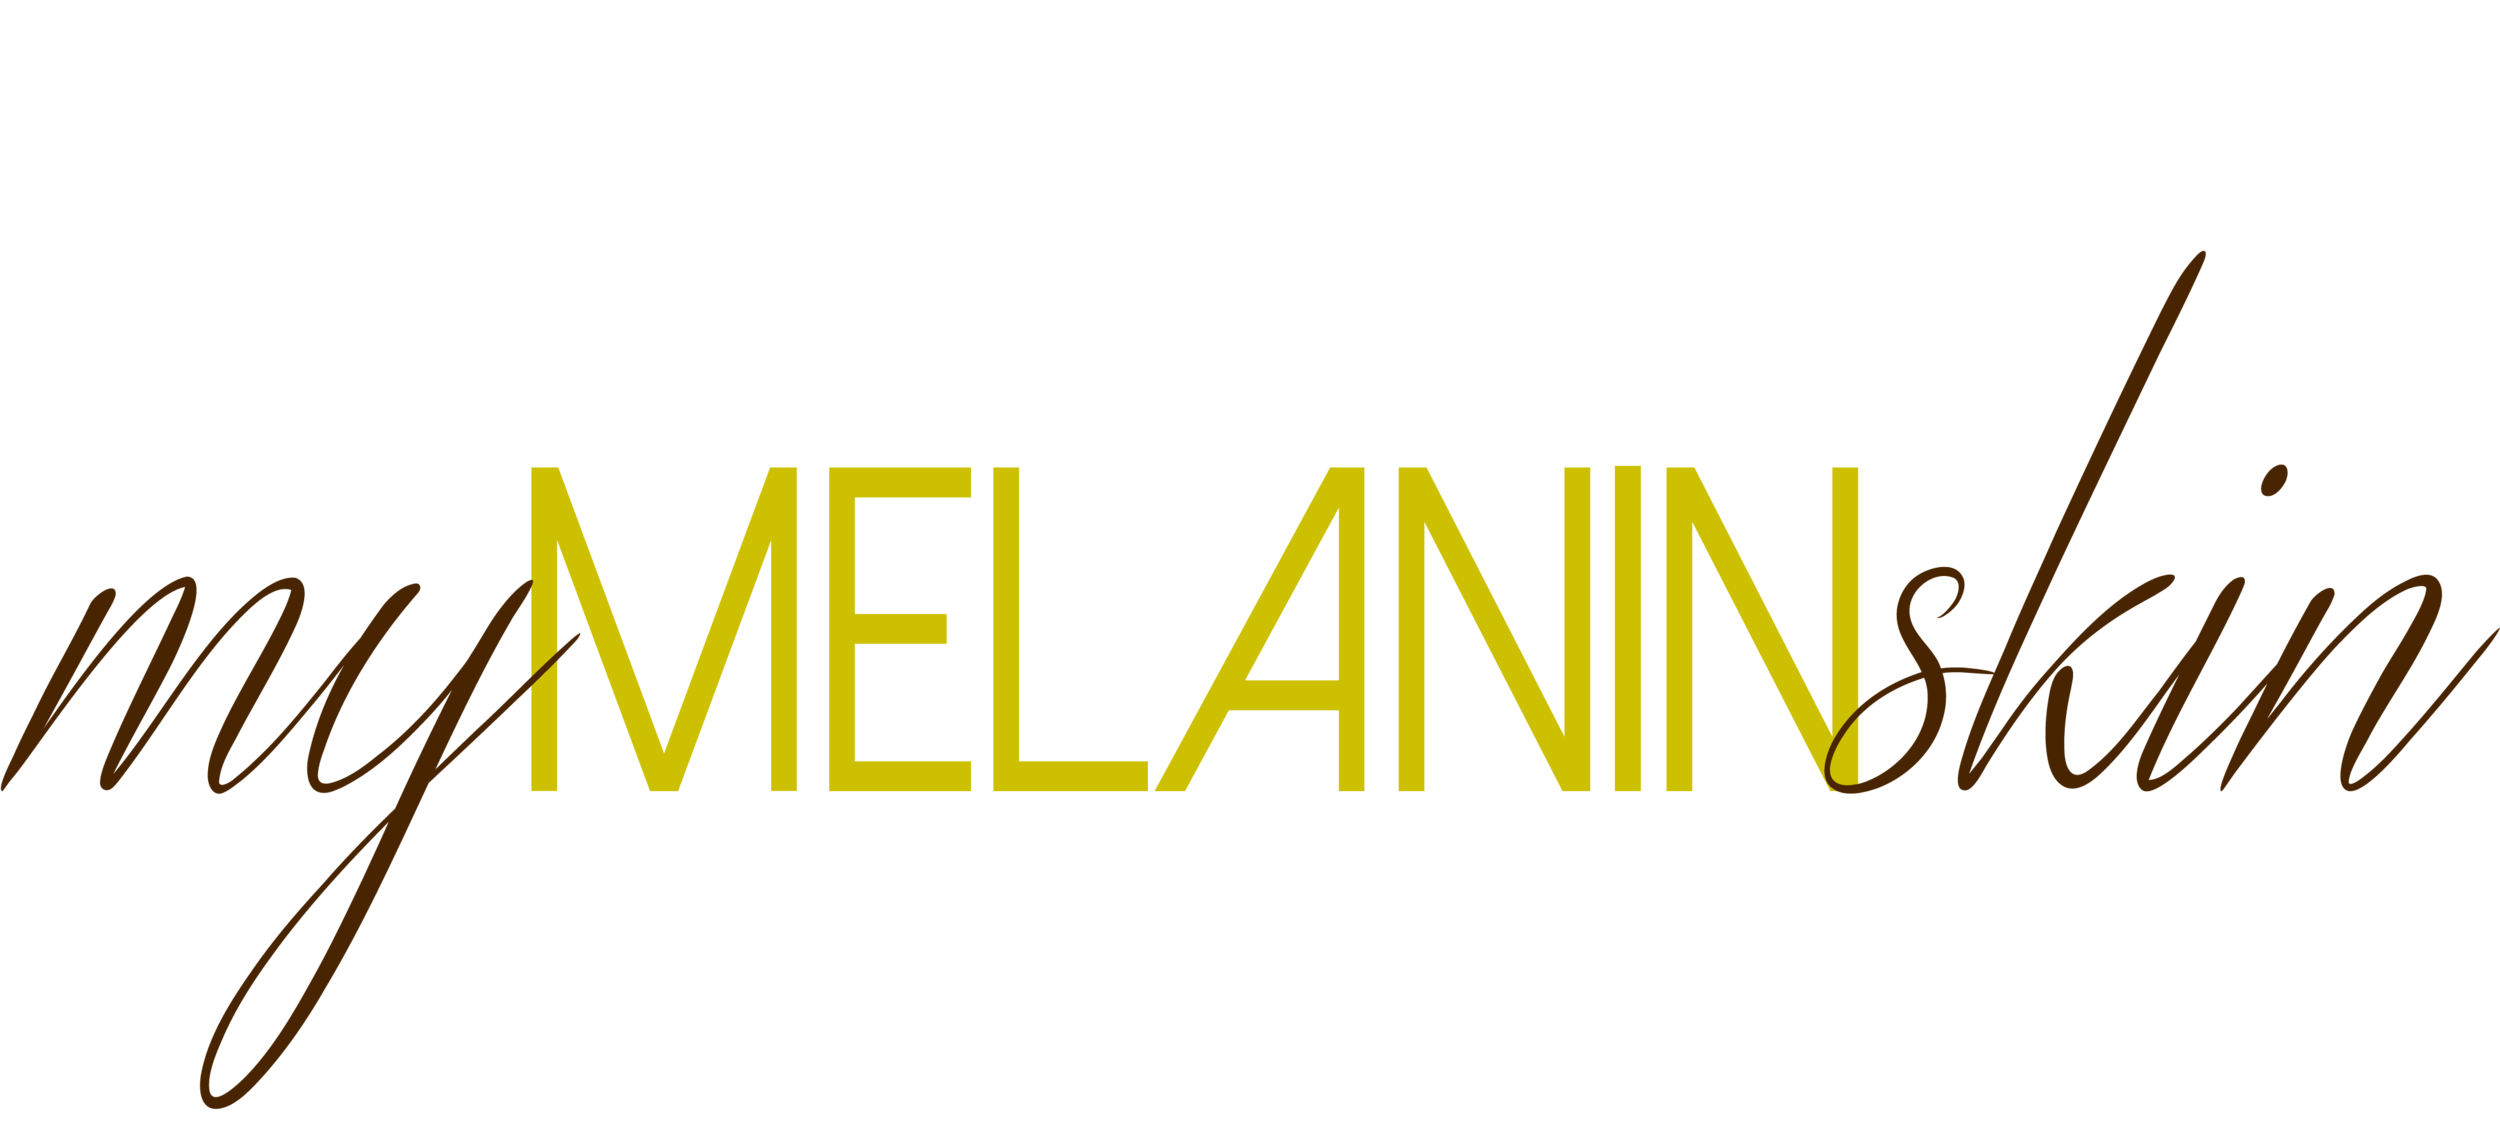 My Melanin Skin